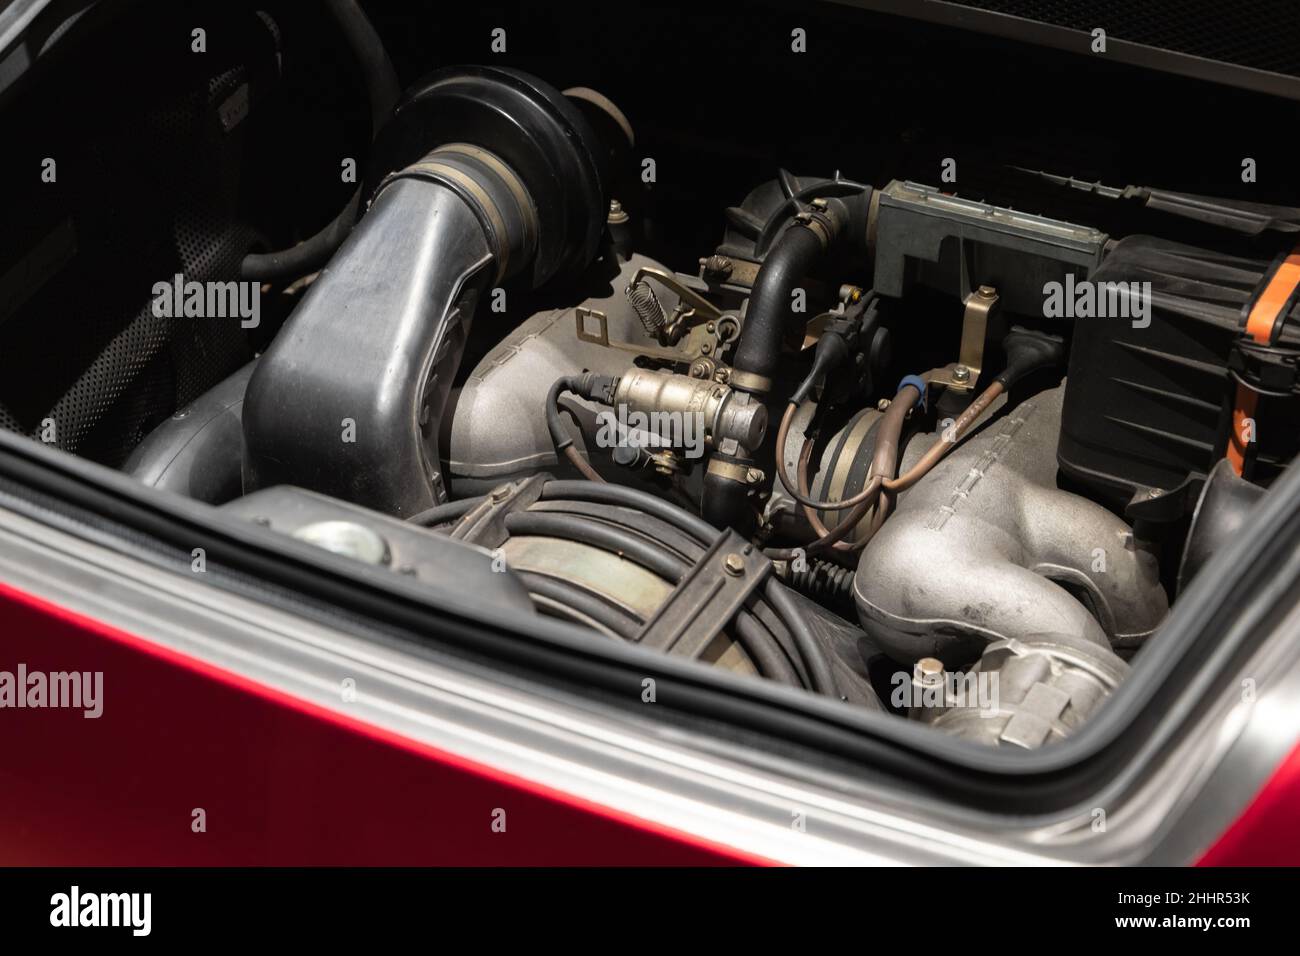 Saint-Petersburg, Russia - January 29, 2021: Porsche car engine is under open hood, red roadster turbo motor Stock Photo